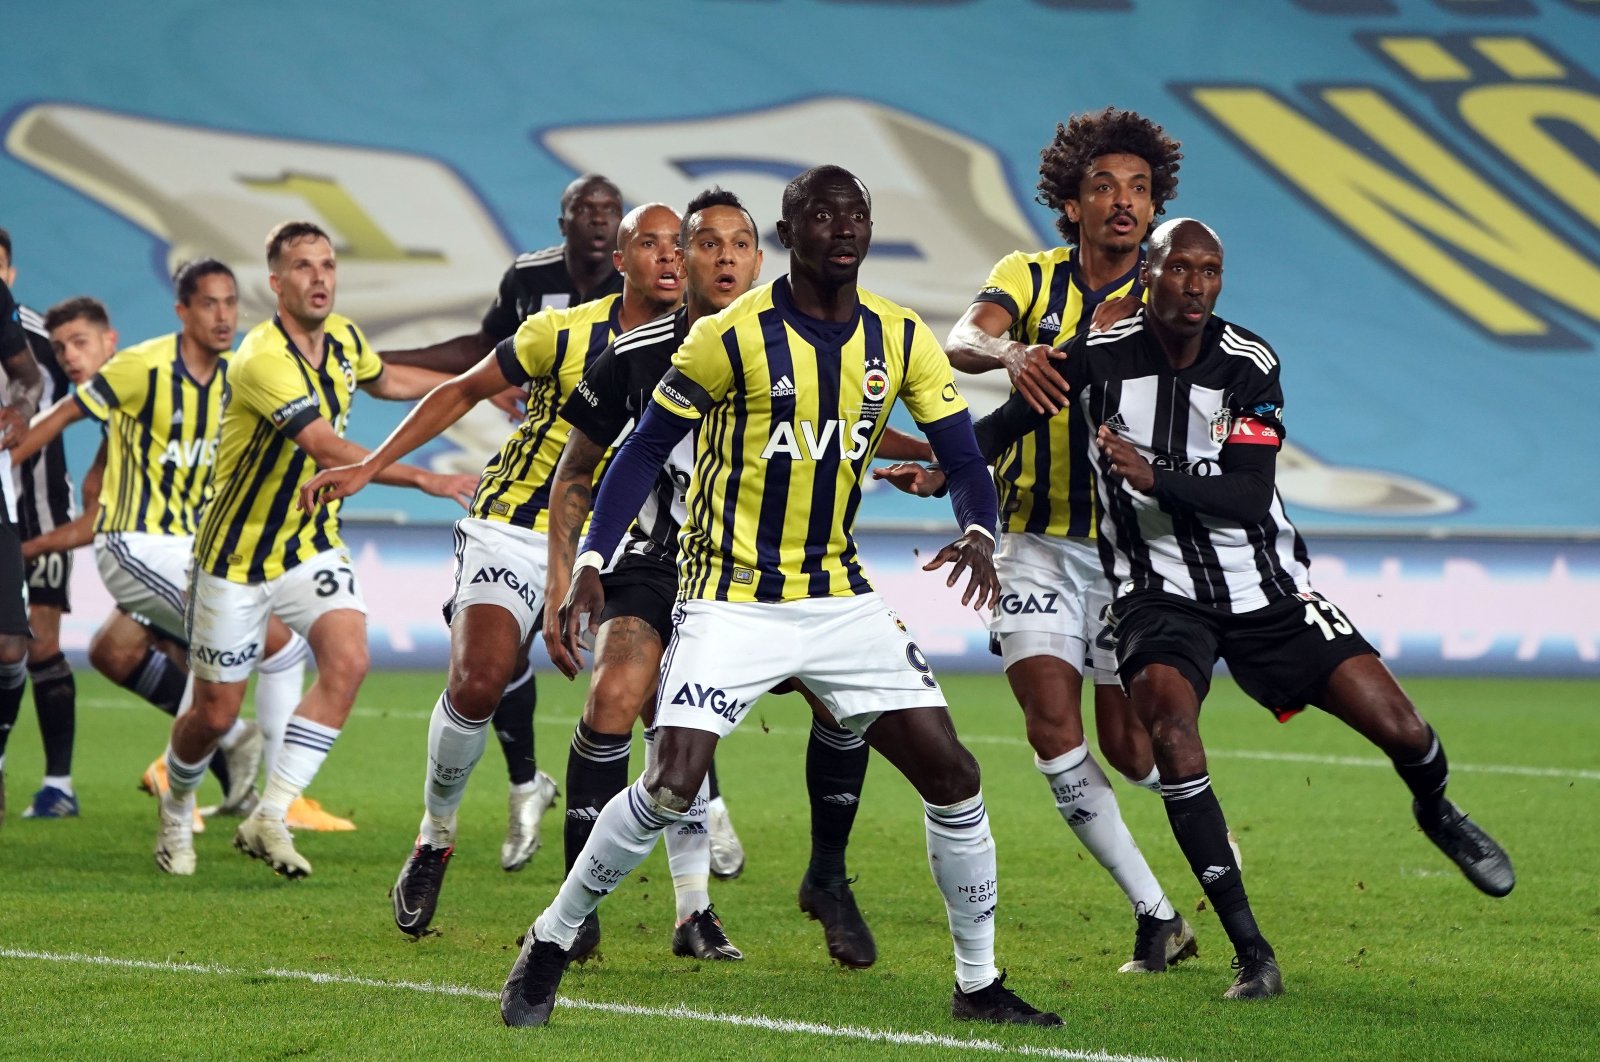 Fenerbahçe players tries to defend a Beşiktaş attack during a Turkish Süper Lig match at the Şükrü Saracoğlu Stadium, Istanbul, Turkey, Nov. 29, 2020. (IHA Photo)